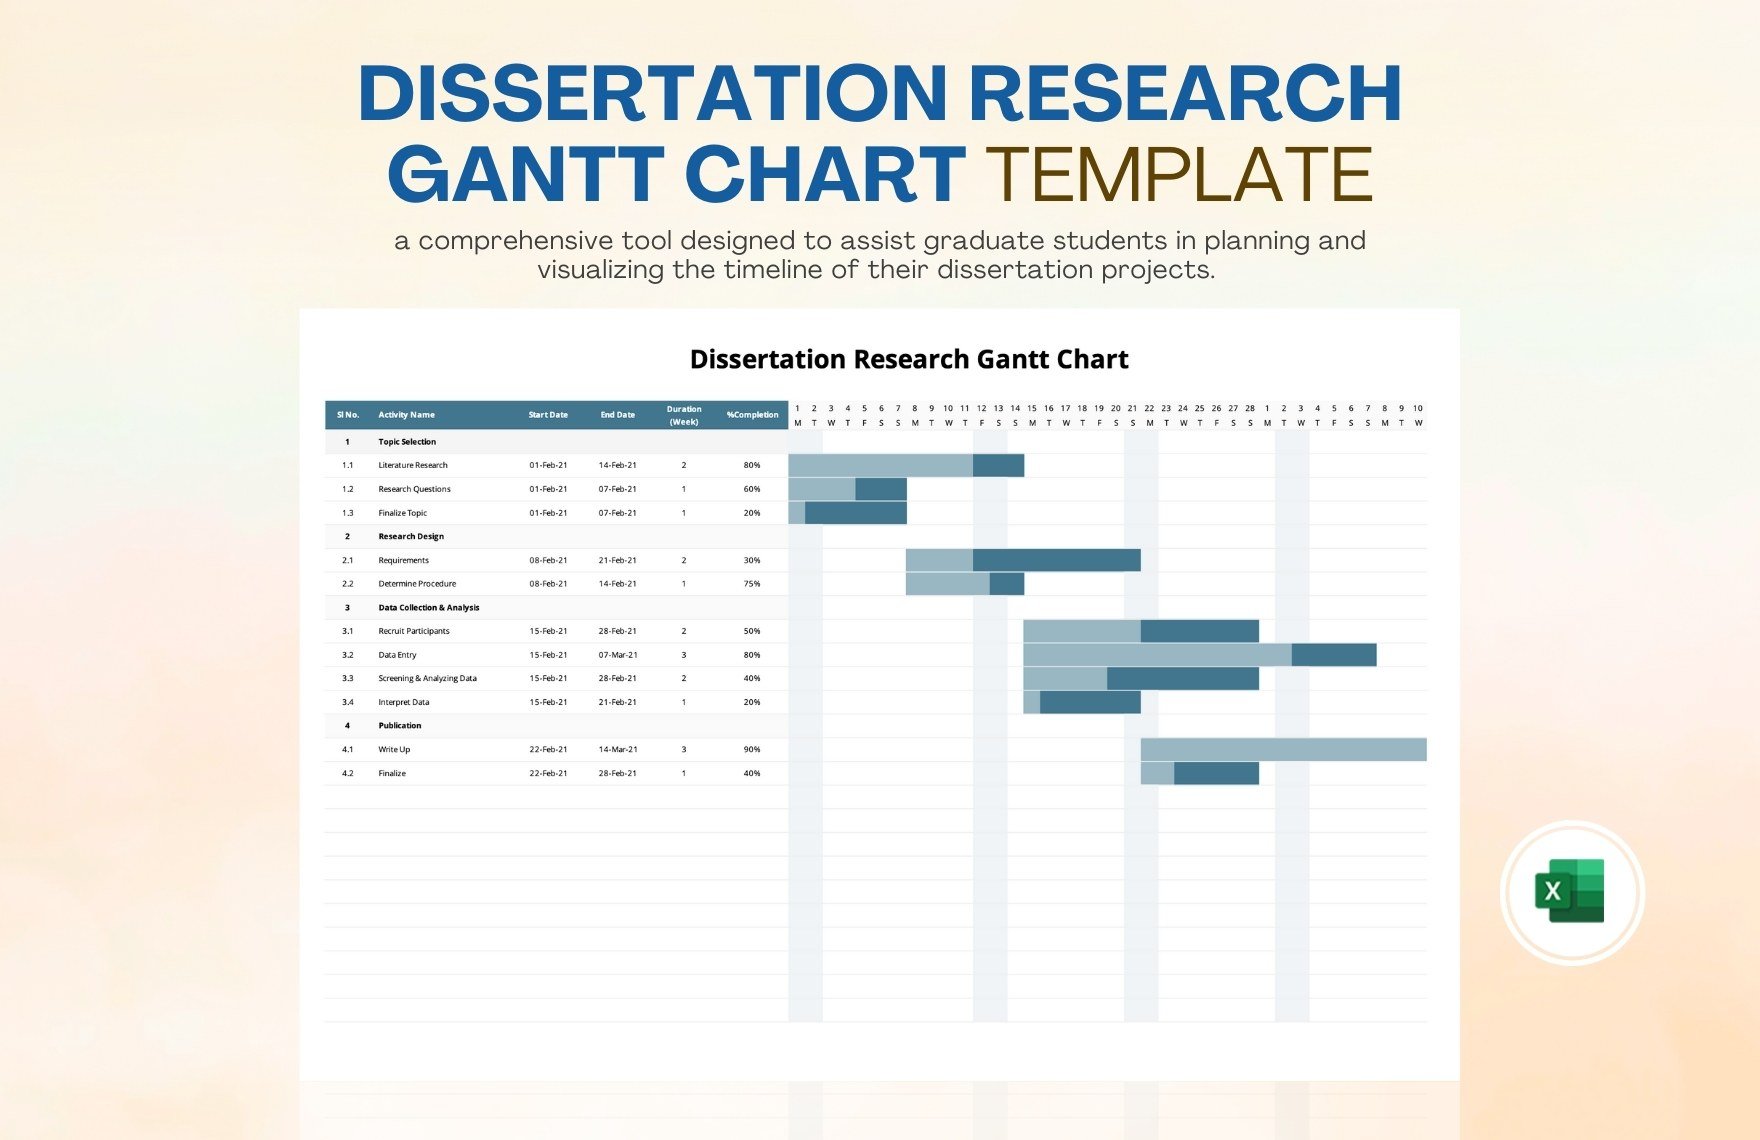 Dissertation Research Gantt Chart Template in Excel